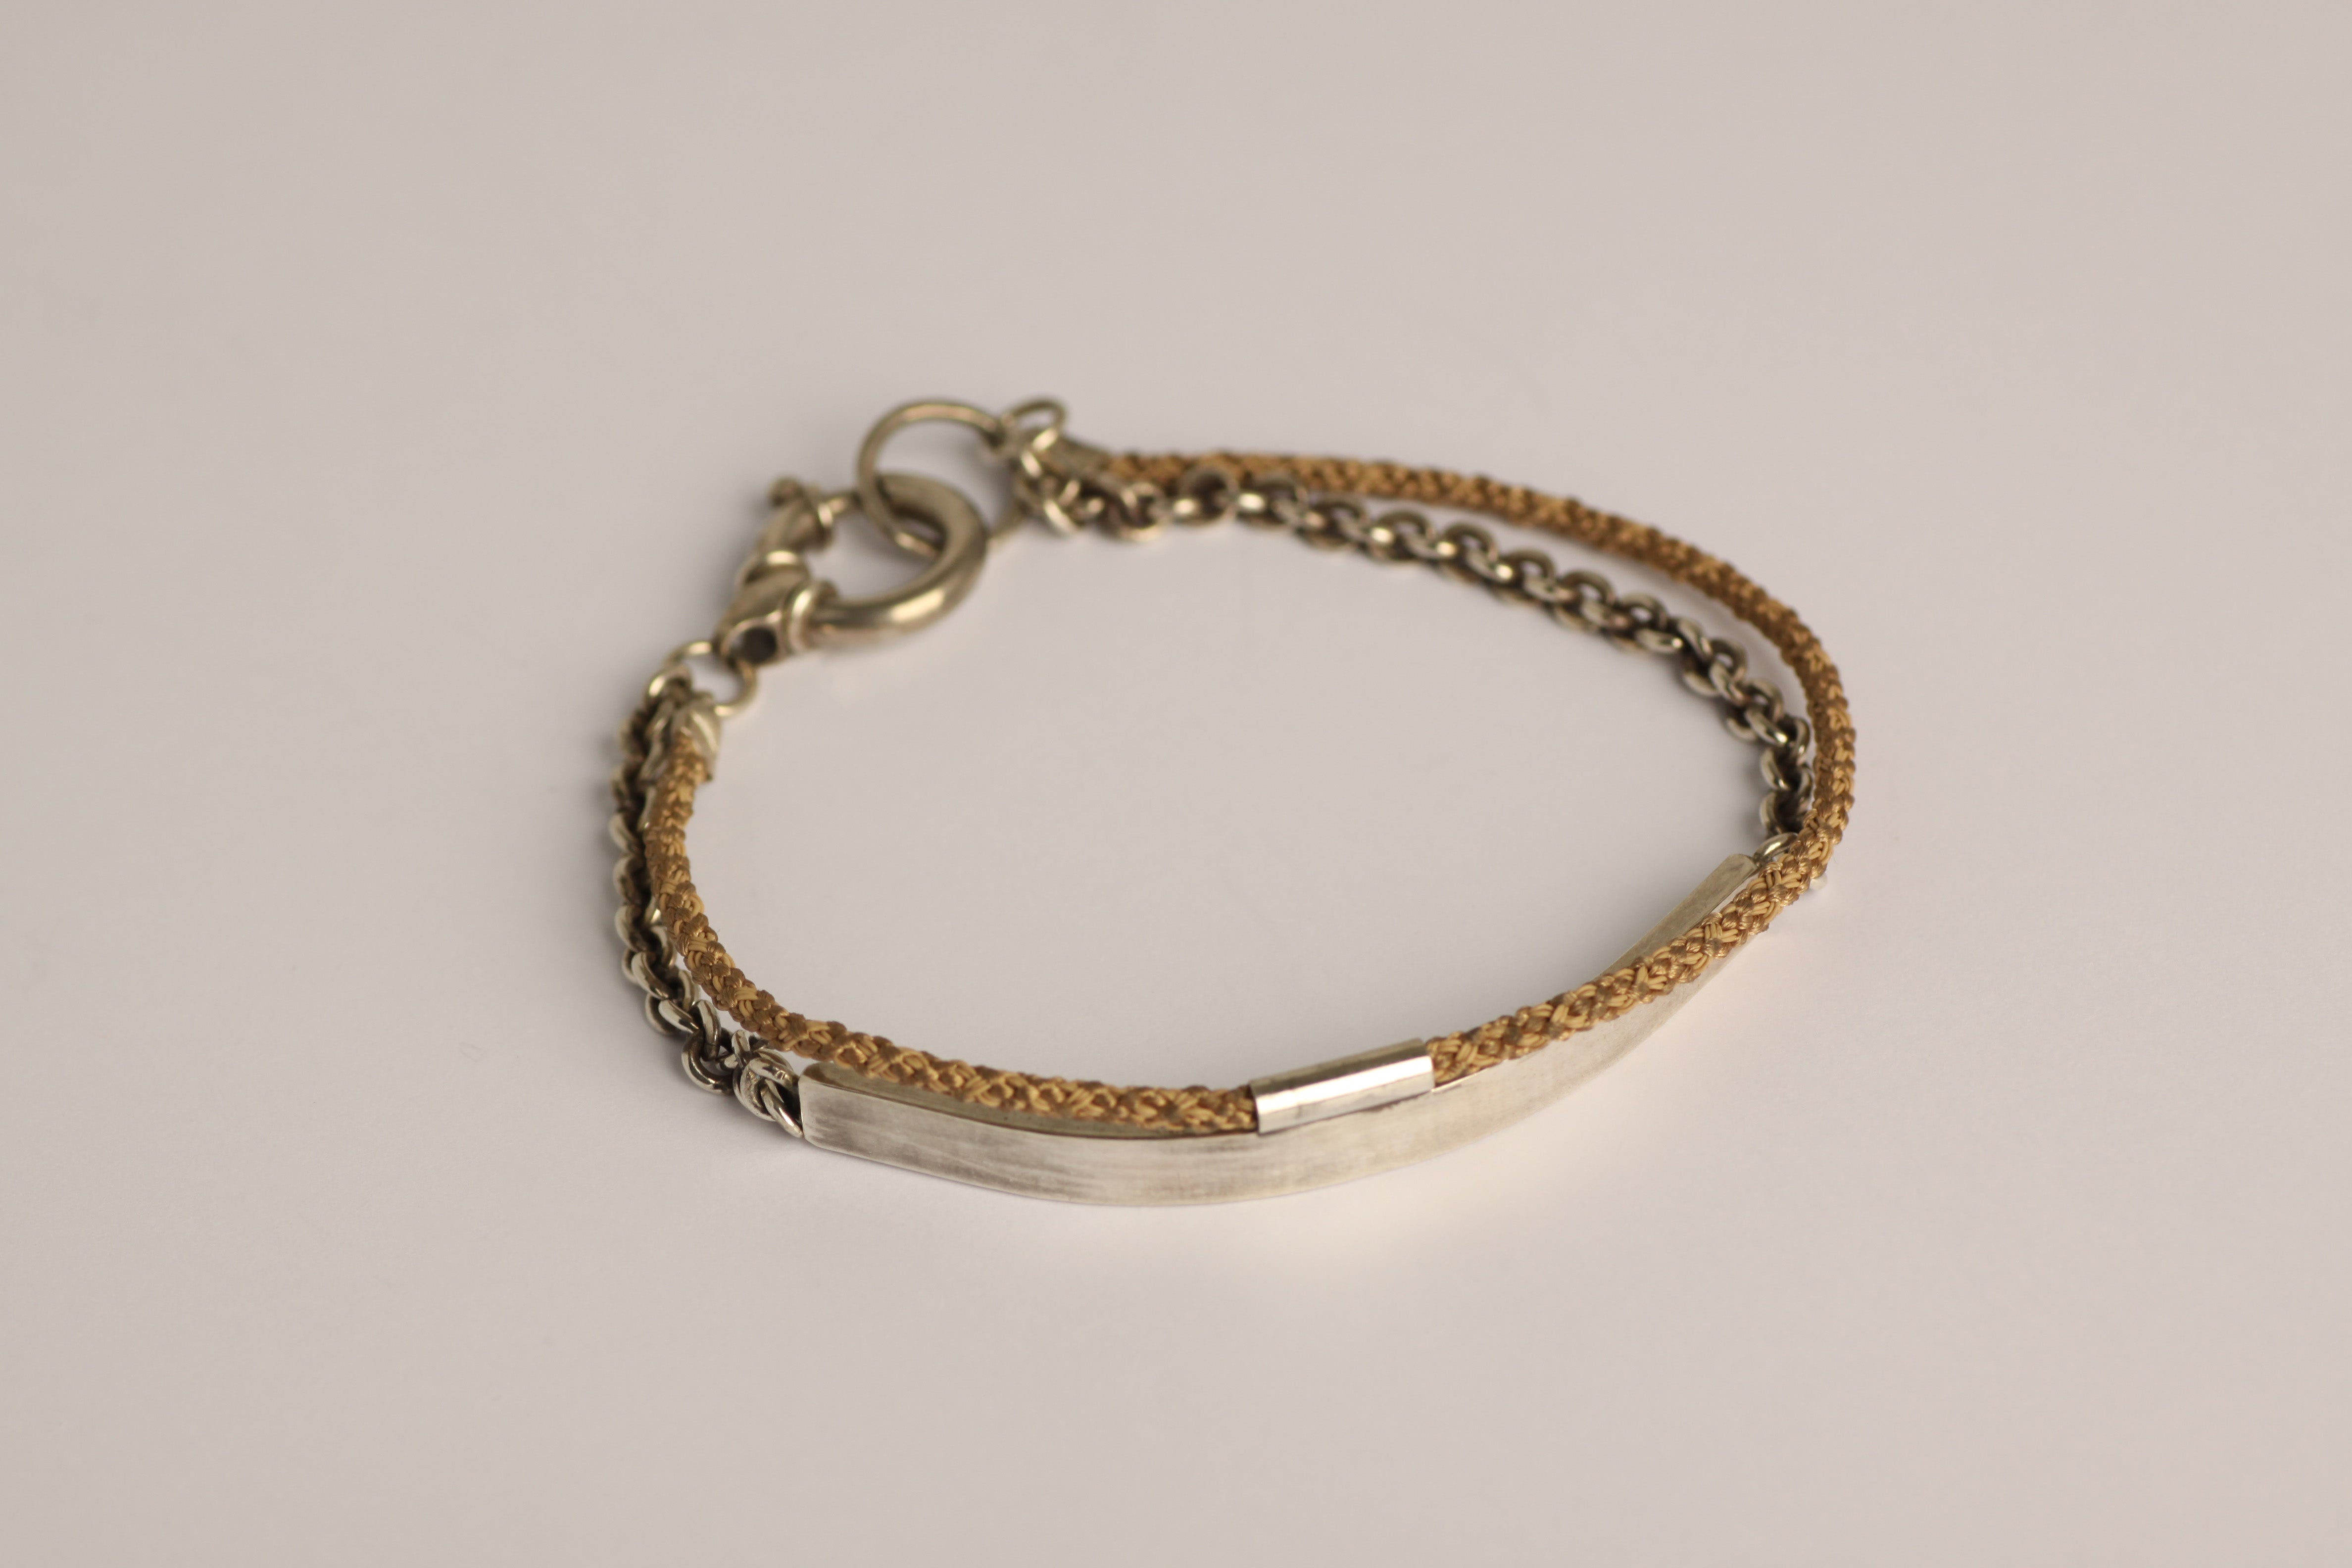 Edouchi kumihimo & Silver plate bangle bracelet